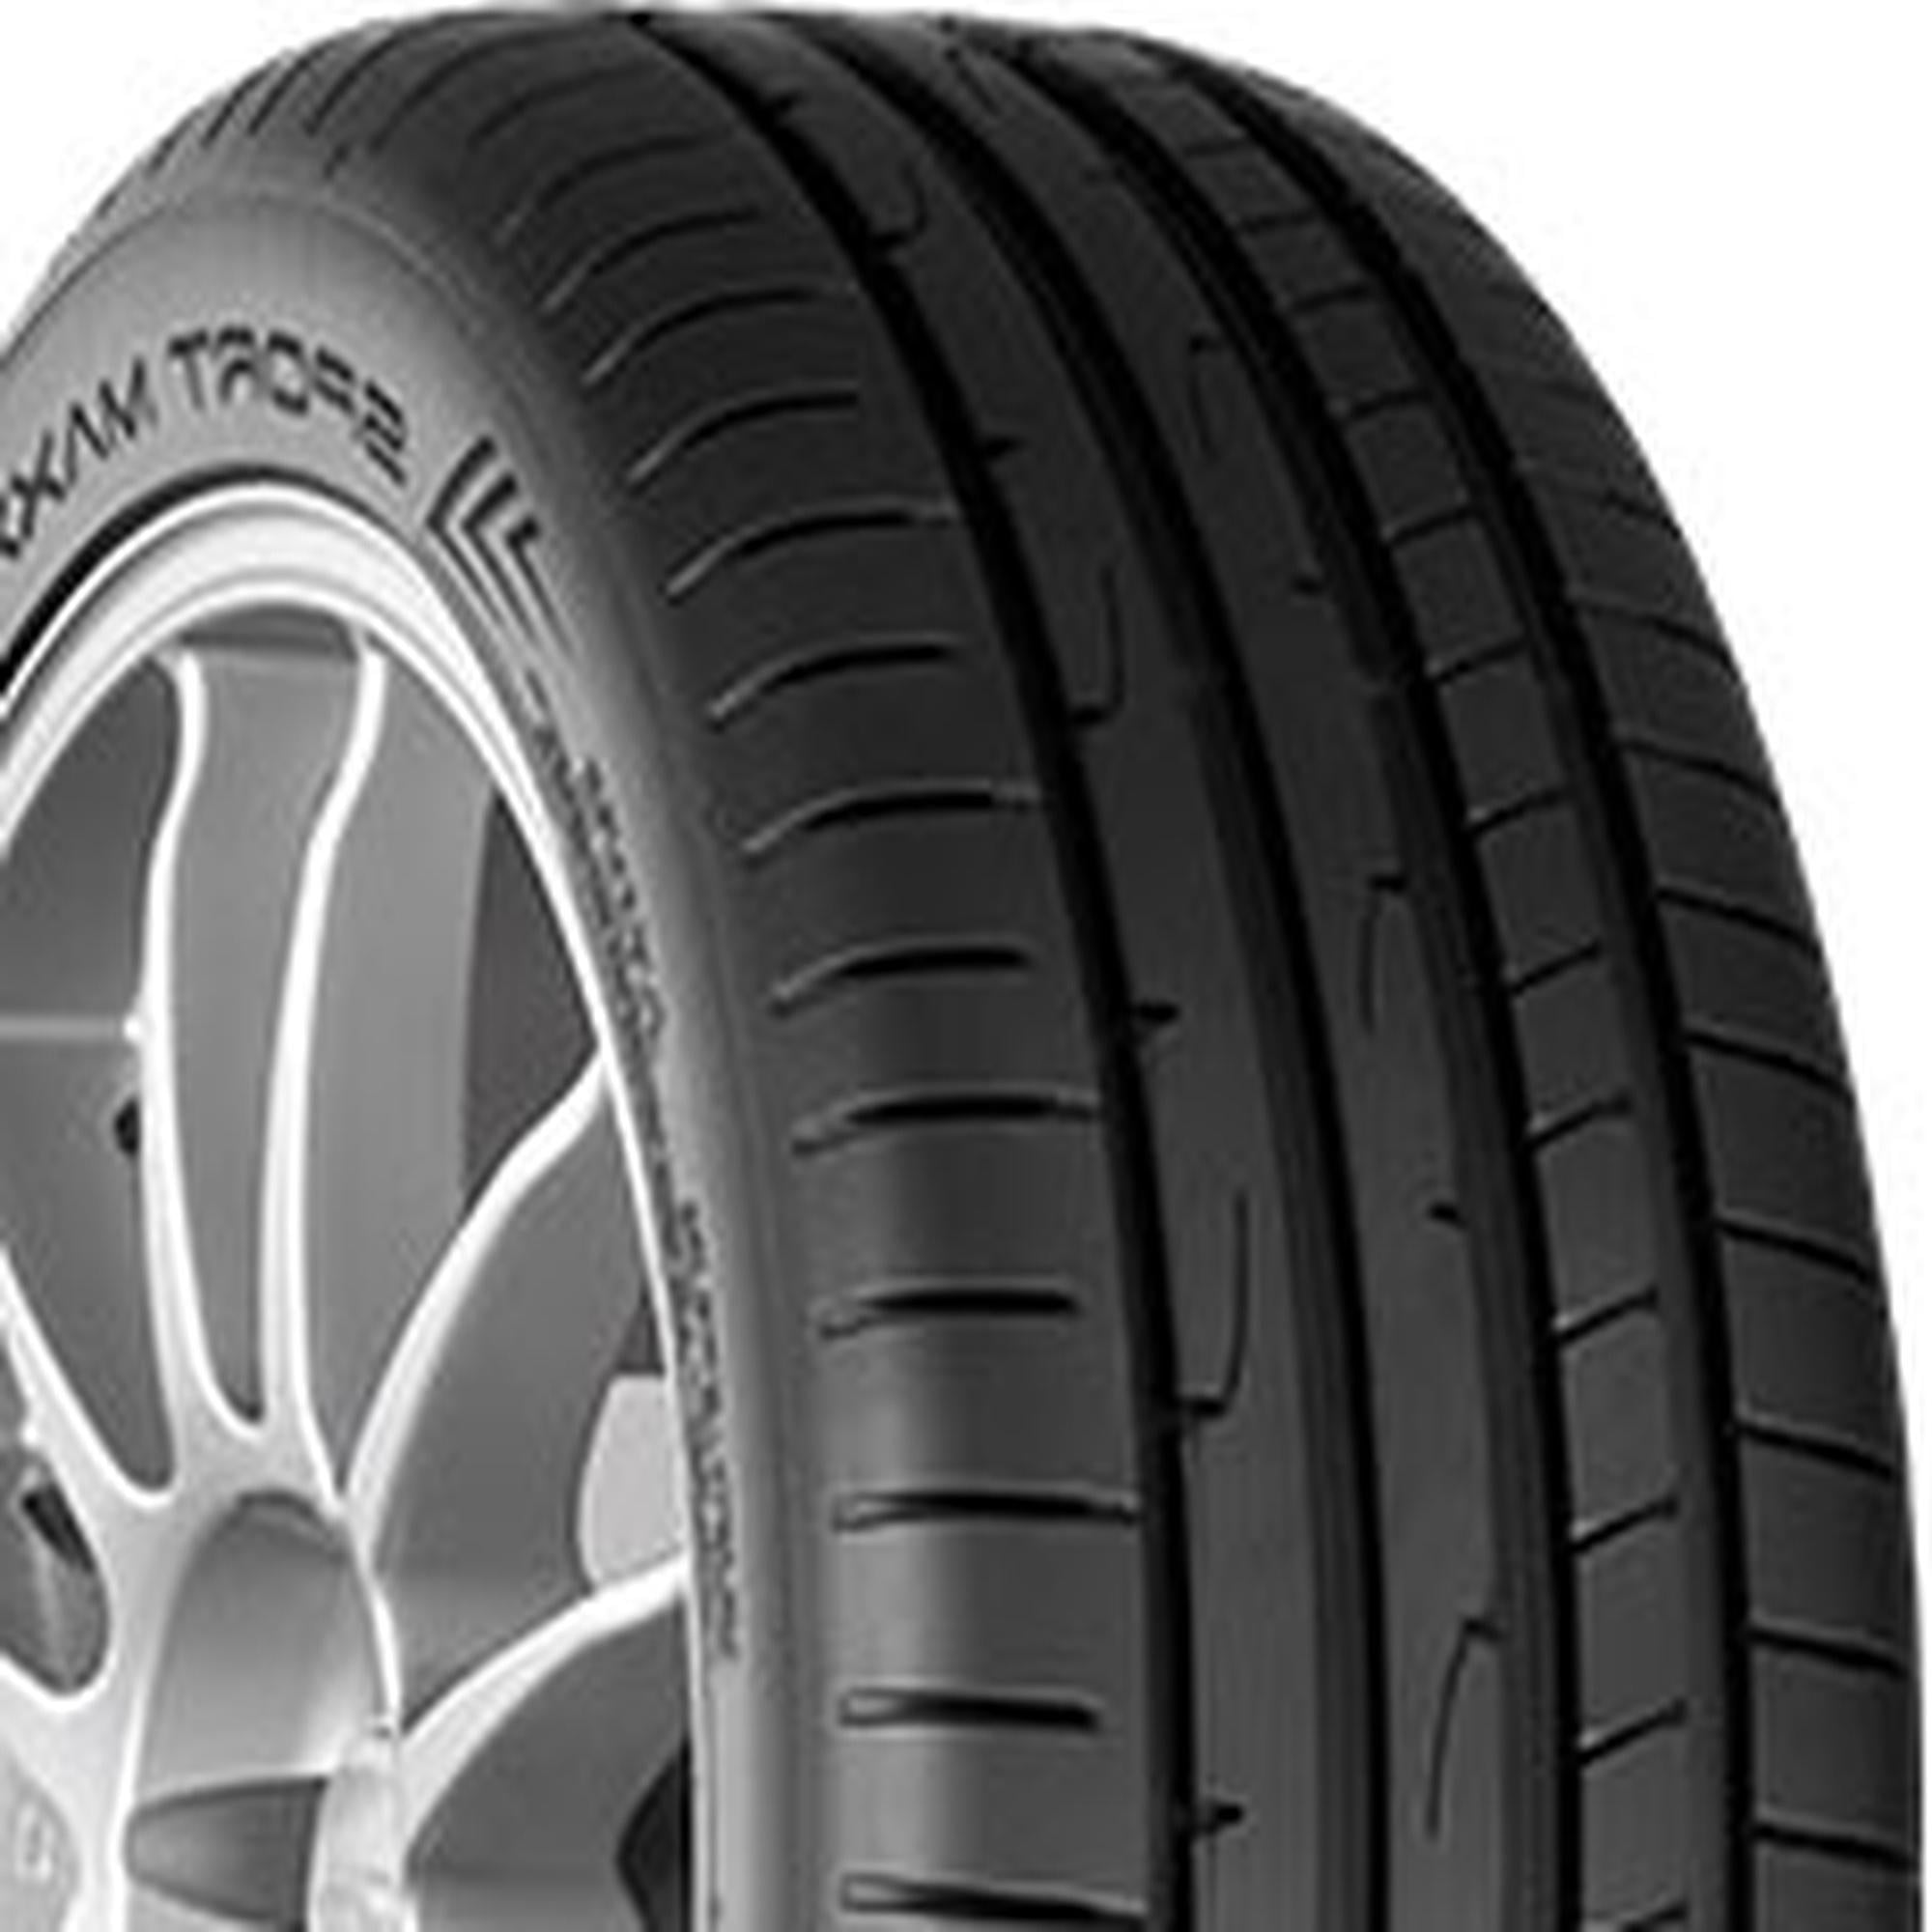 Fits: V Rt2 Base, Cadillac 2016-19 Tire ATS Dunlop BMW 328i Maxx Sport 2011 94Y Performance 255/35ZR18